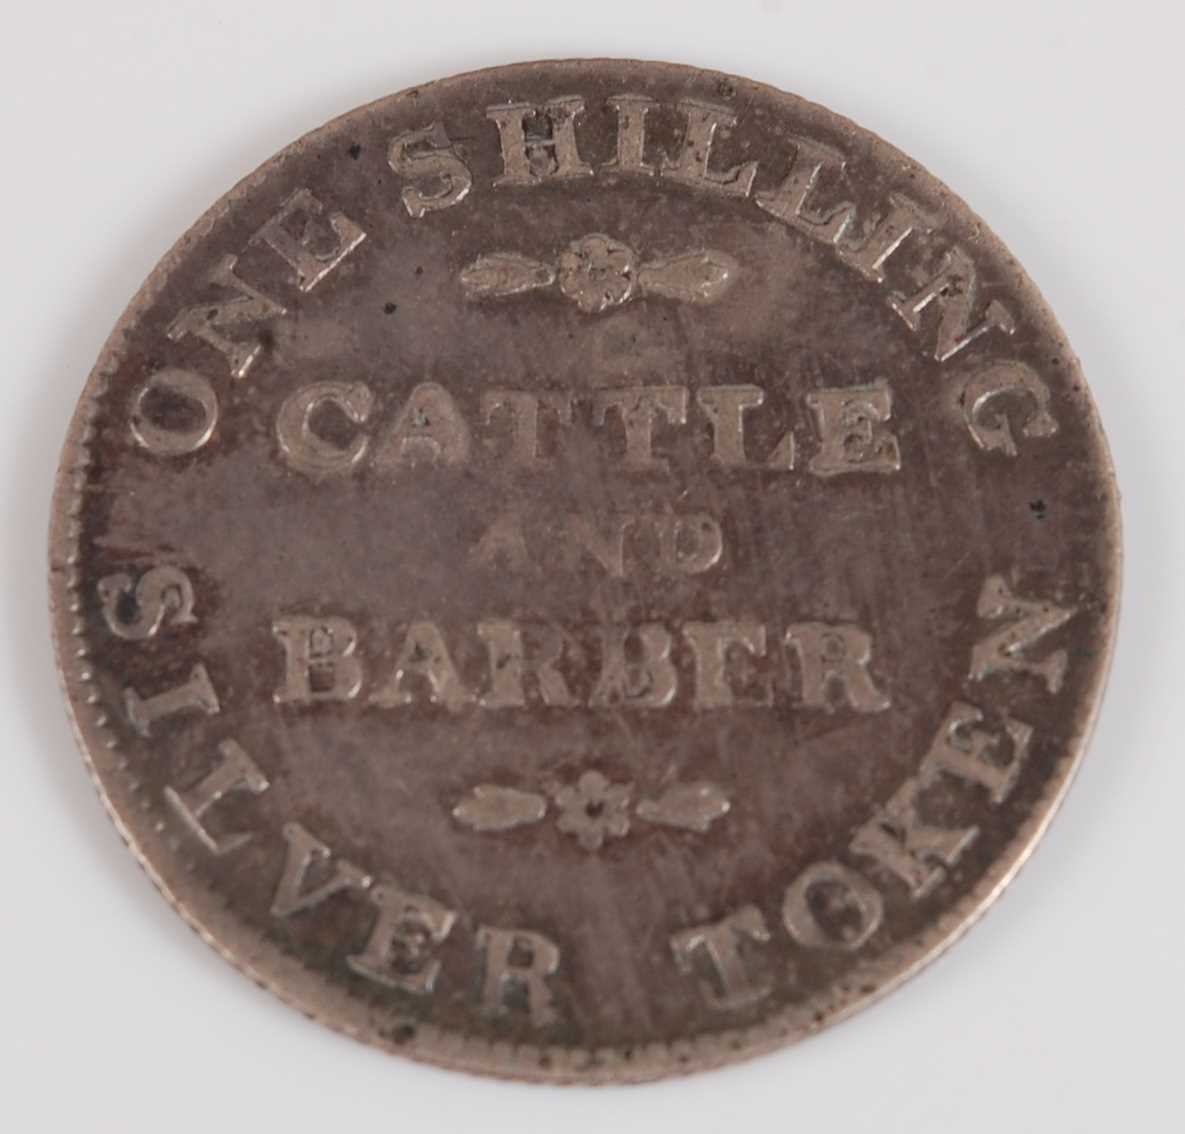 Lot 2086 - Great Britain, 1 Shilling token